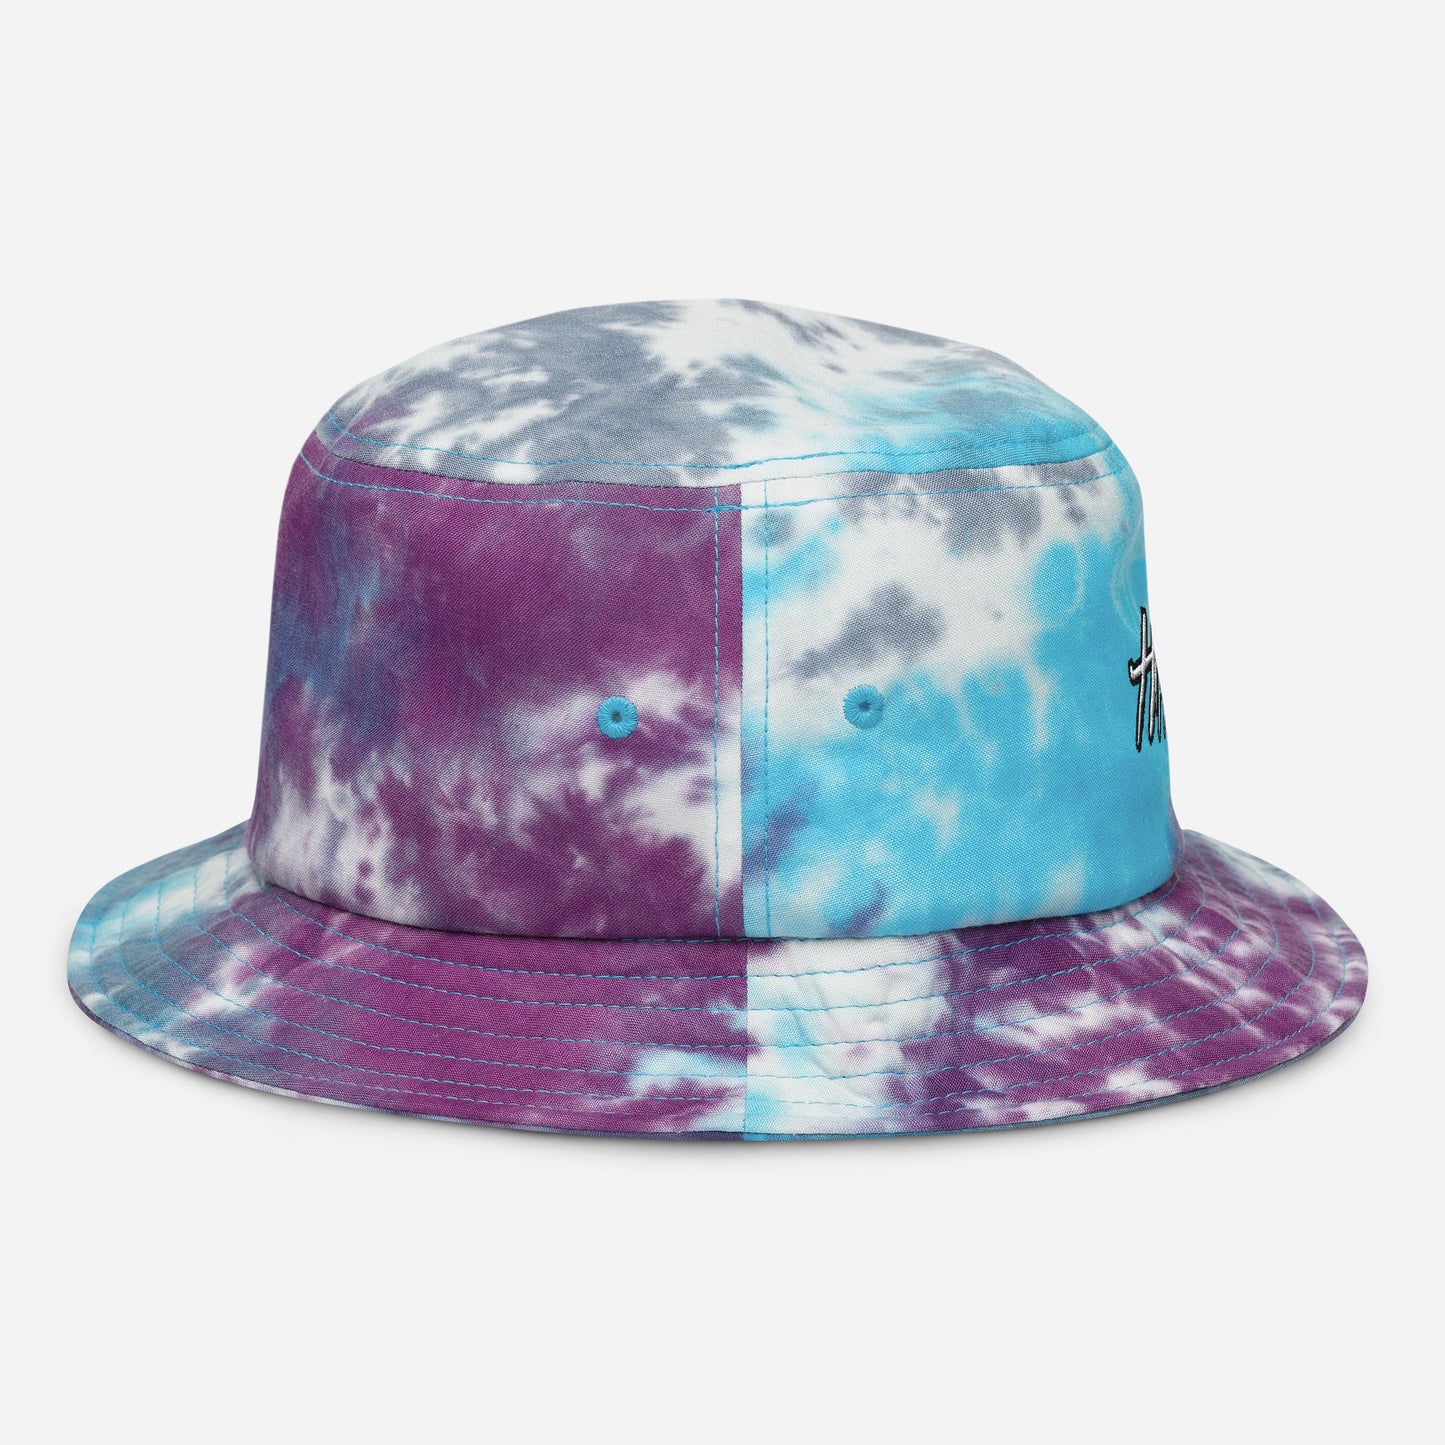 Hippy Mood Signature | Tie-dye Bucket Hat